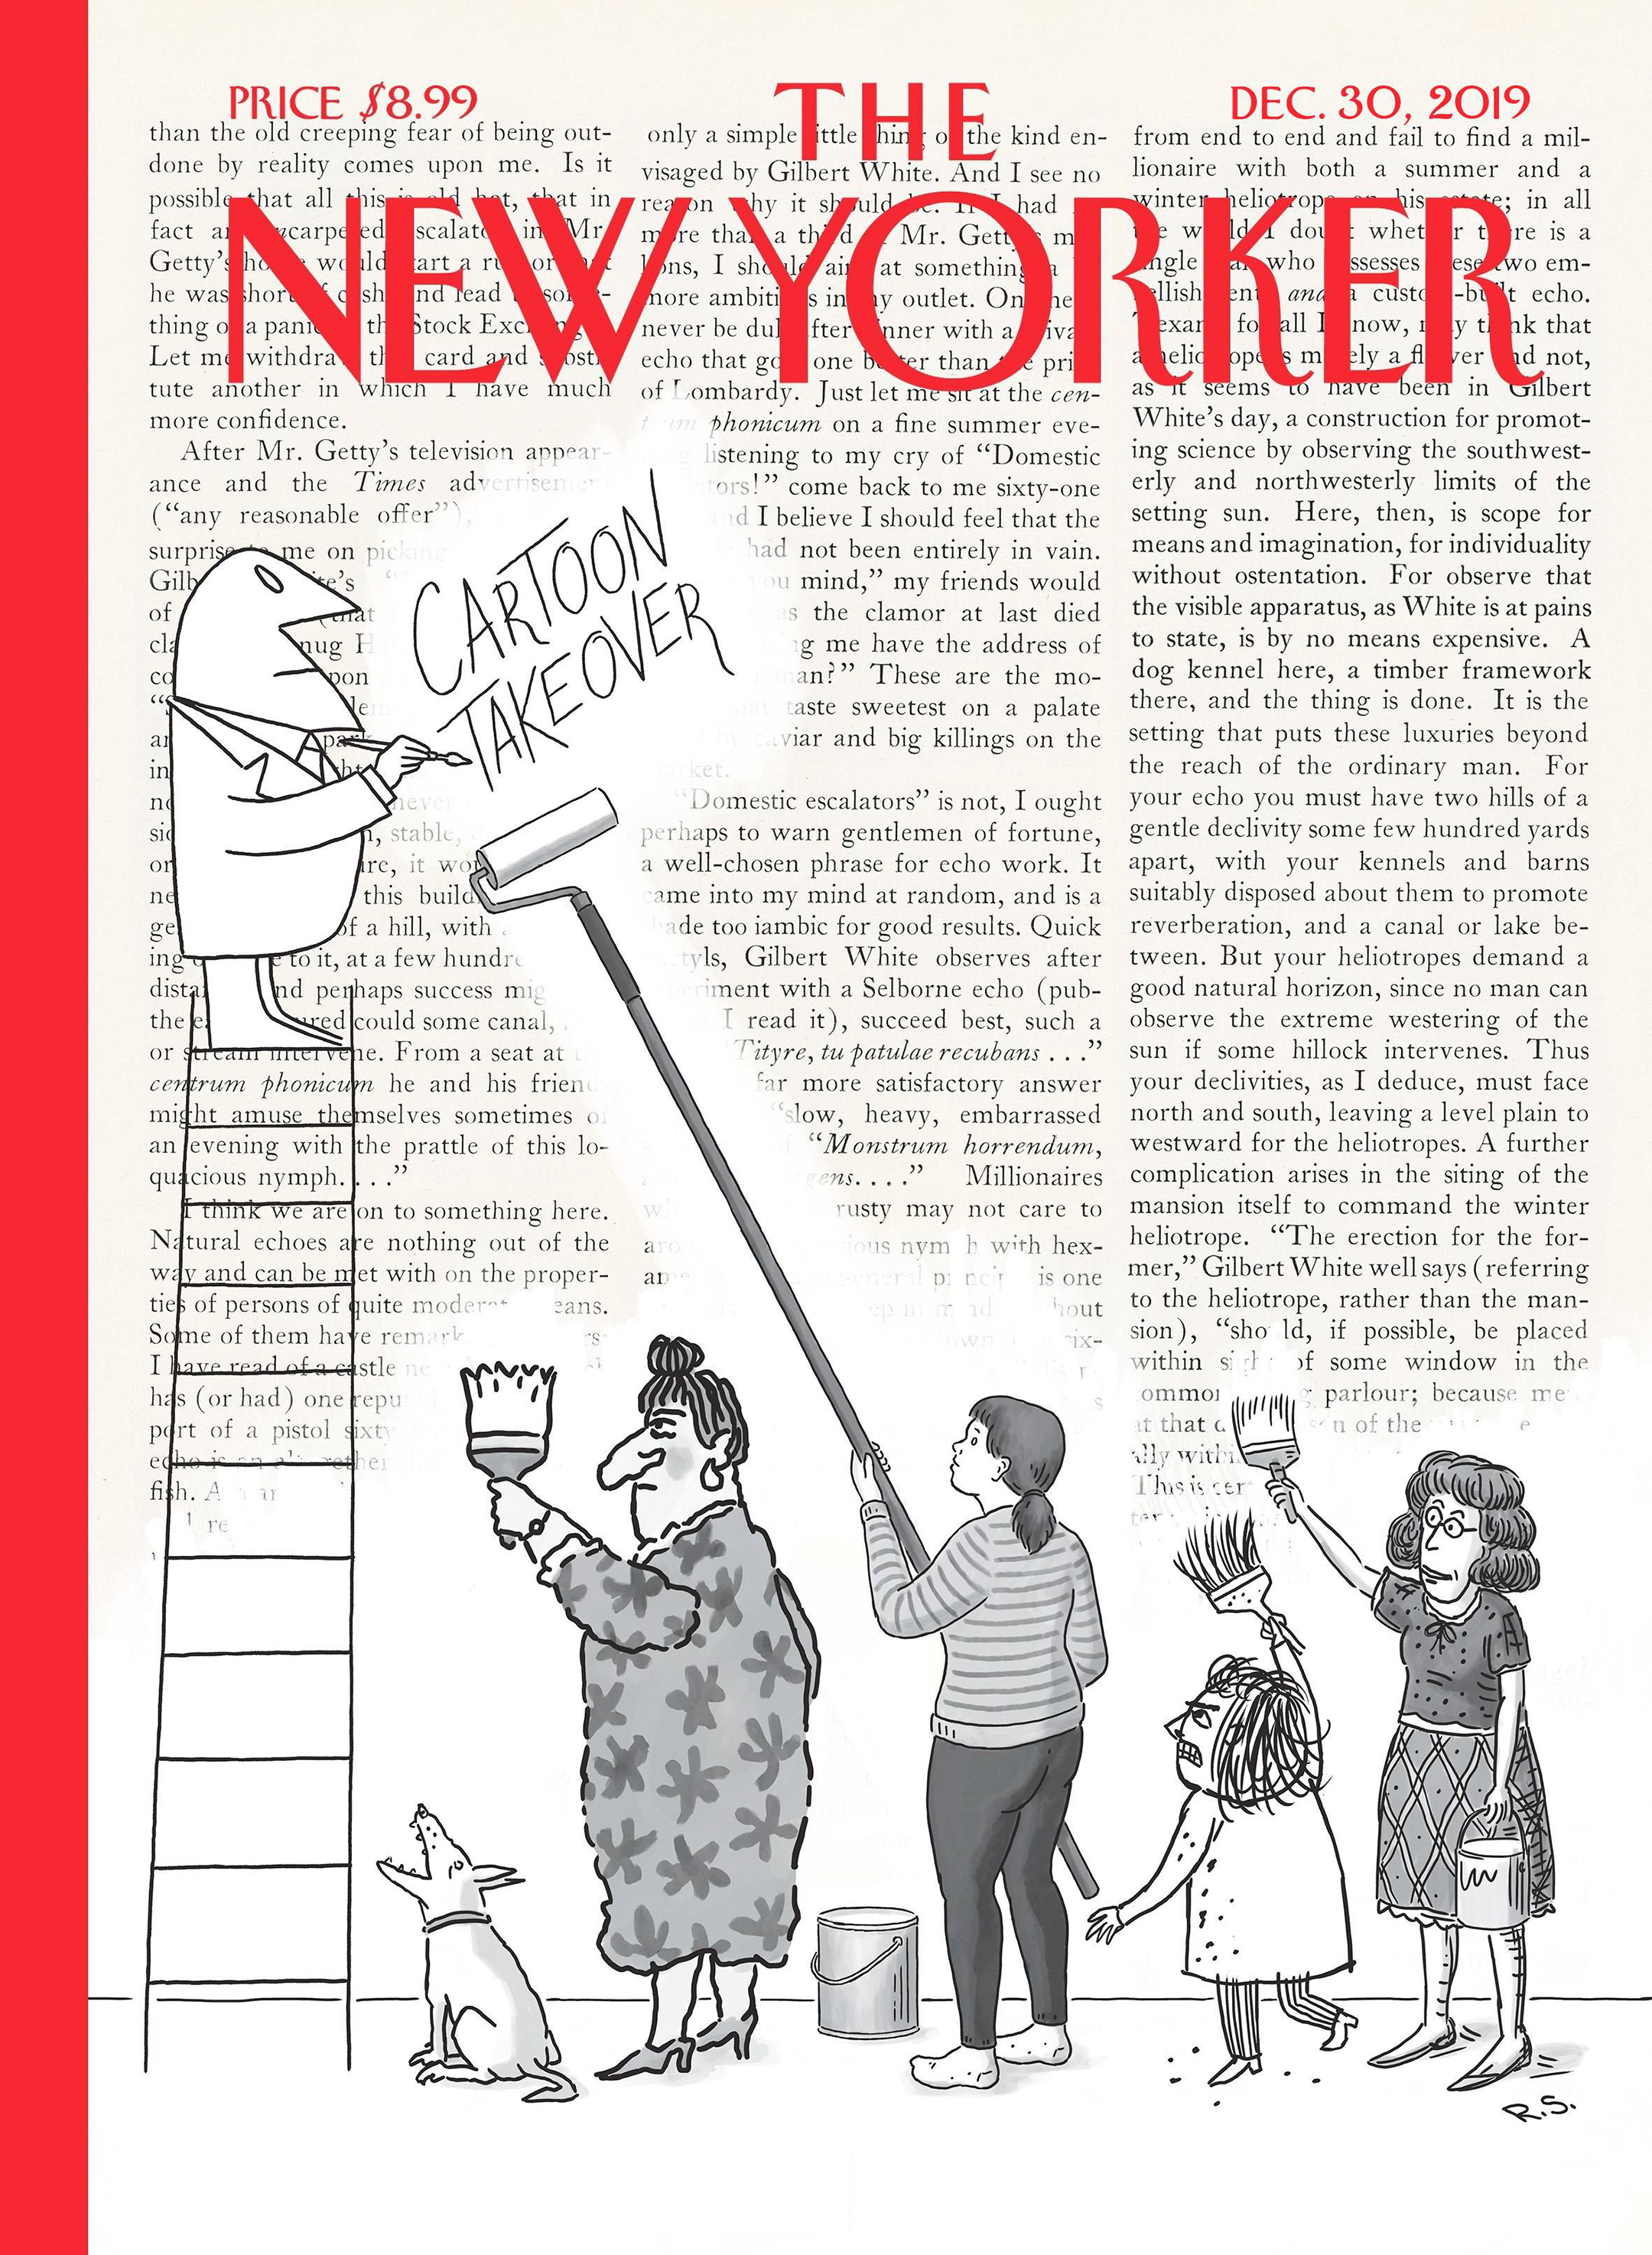 New Yorker Cartoon Editor Emma Allen's School Days Influences – The Elective